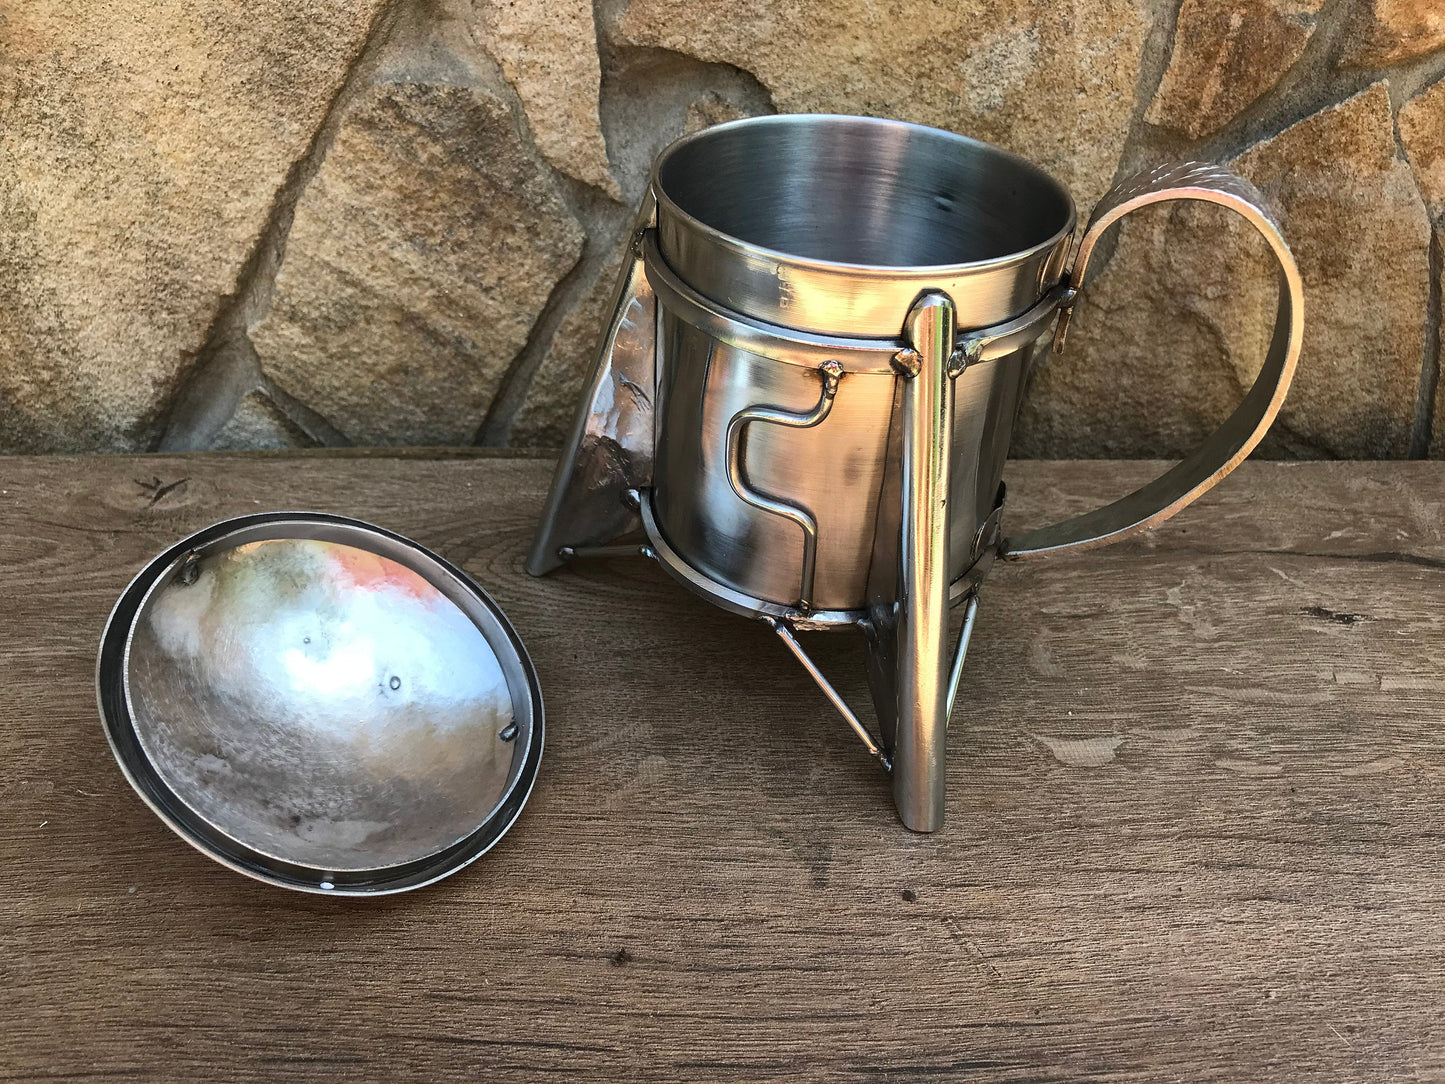 Cup, coffee, mug, tee cup, steel gift, SpaceX, Starhopper, beer stein, 11th anniversary, 11 year anniversary, steel anniversary, drinkware